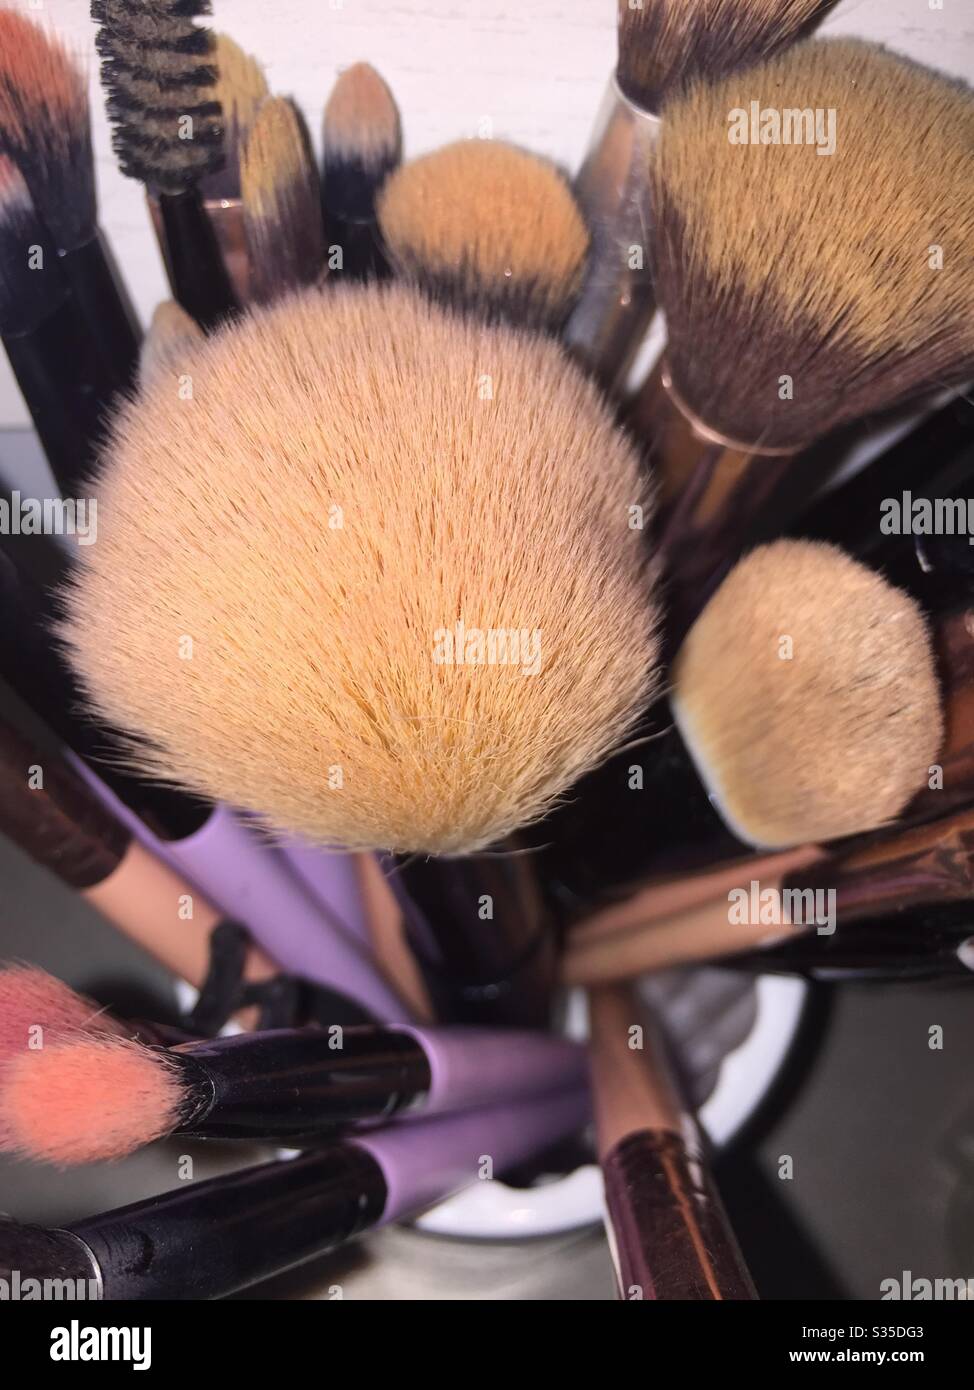 A close up of makeup brushes Stock Photo